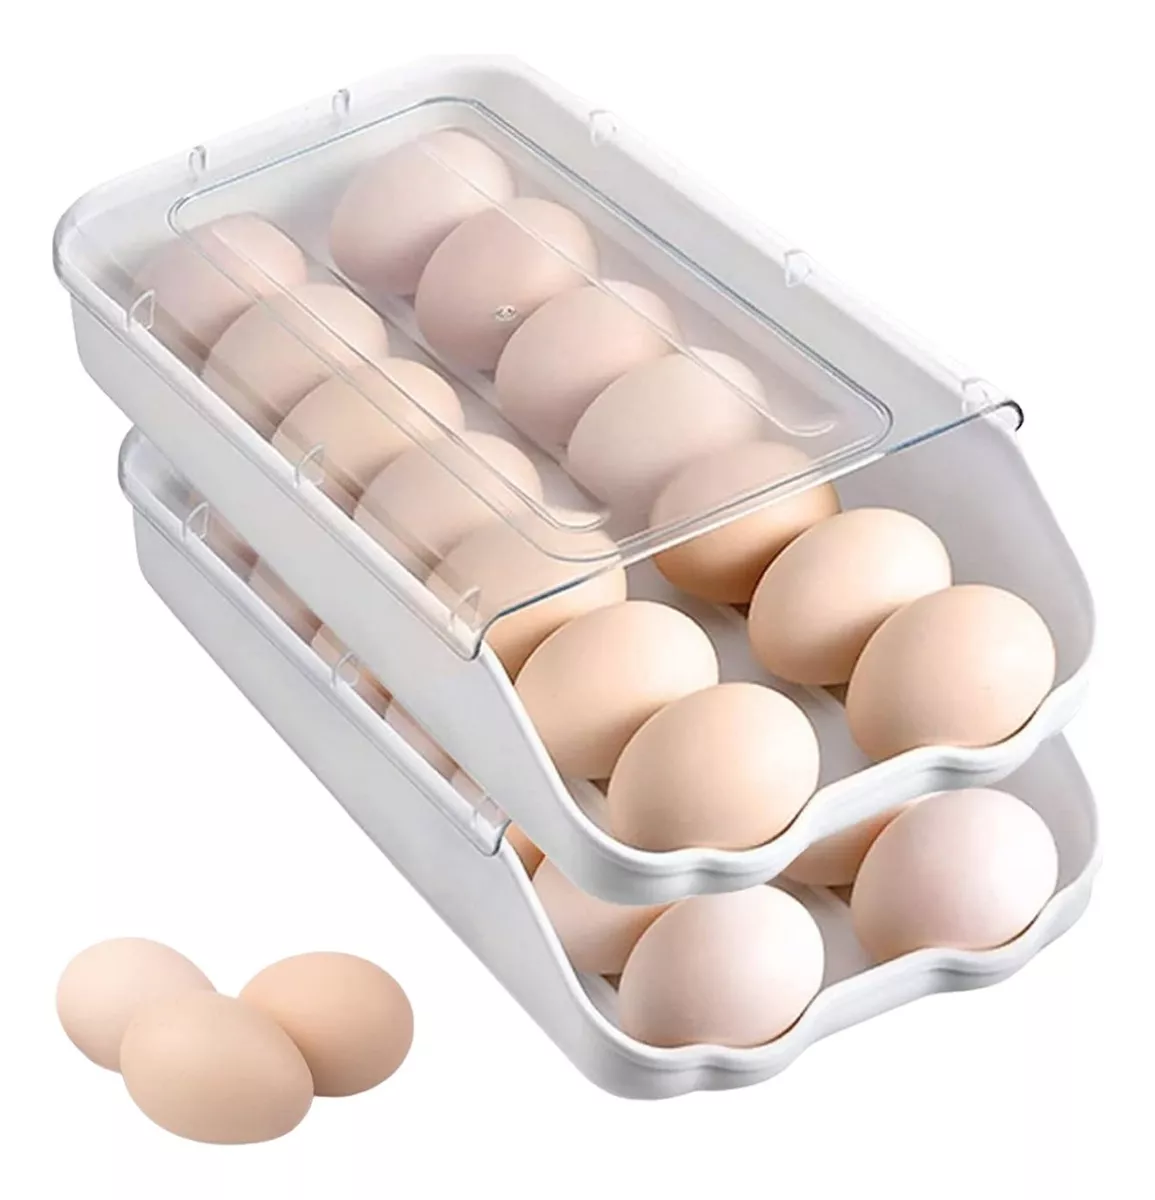 Segunda imagen para búsqueda de porta huevos